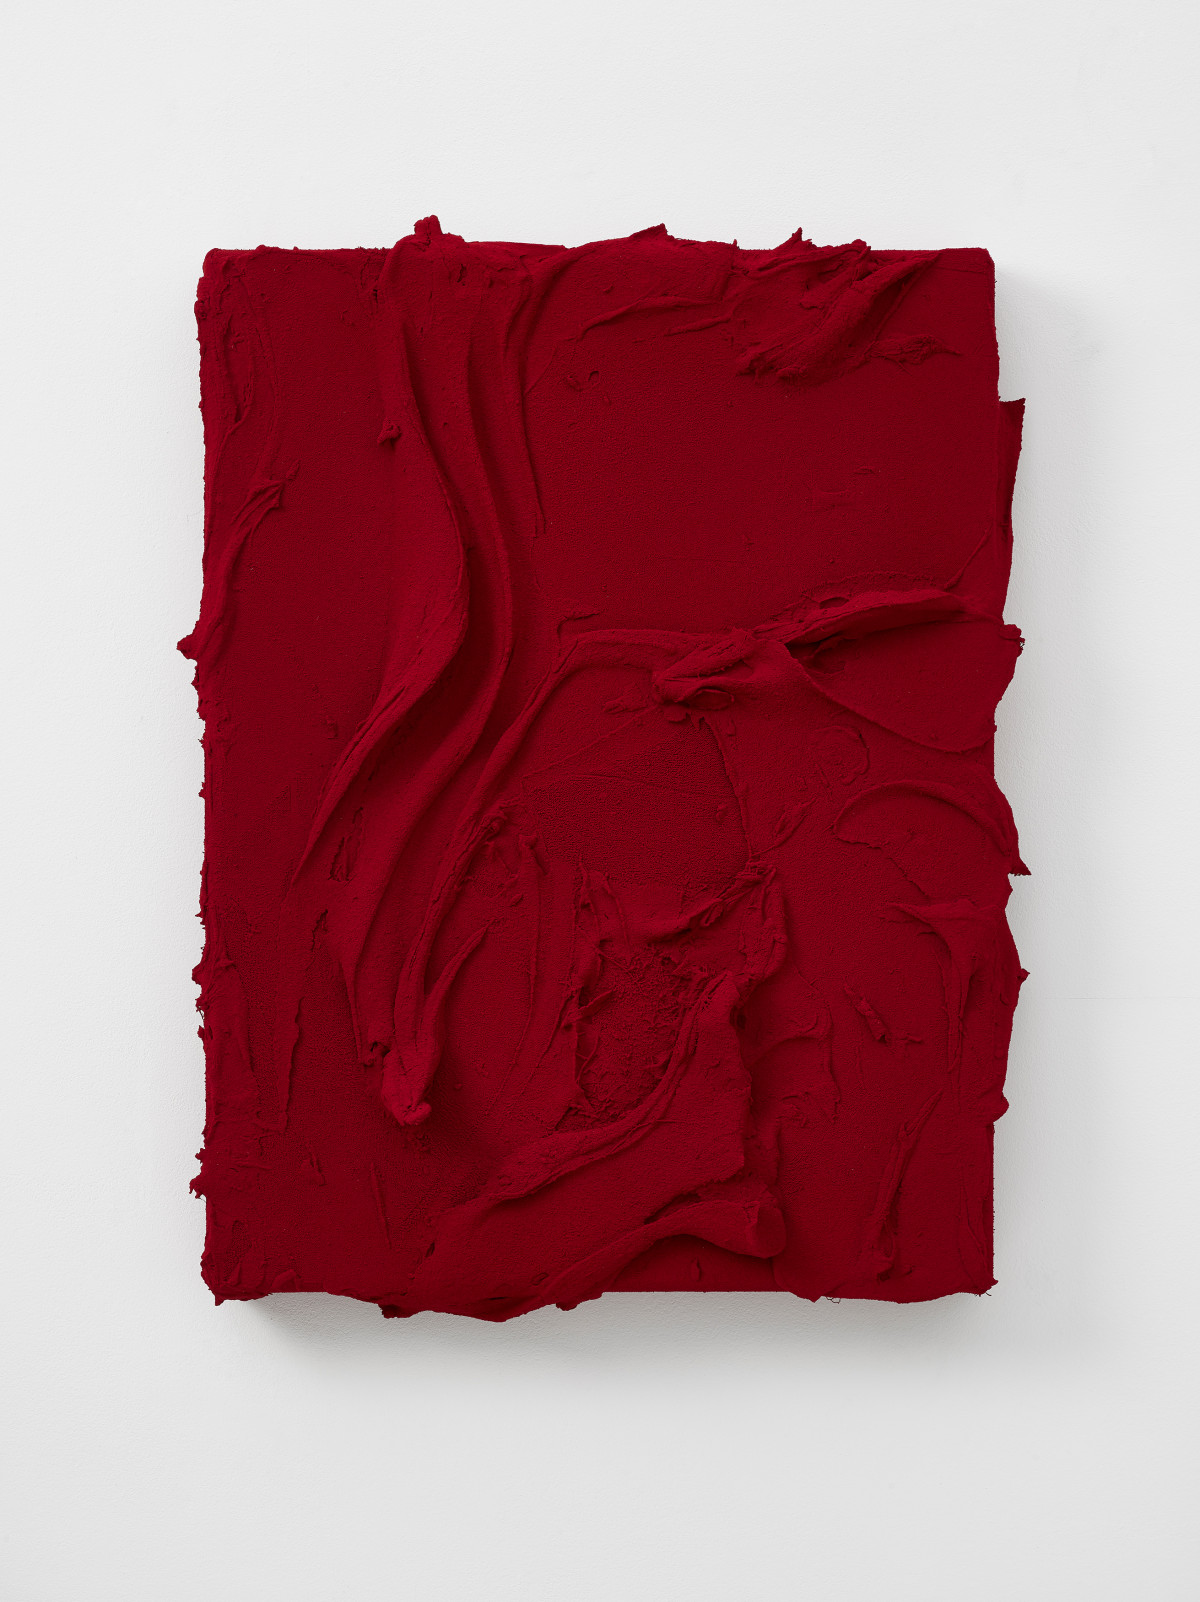 Jason Martin, ‘Thysia (Quinacridone red / Quinacridone scarlet)’, 2015